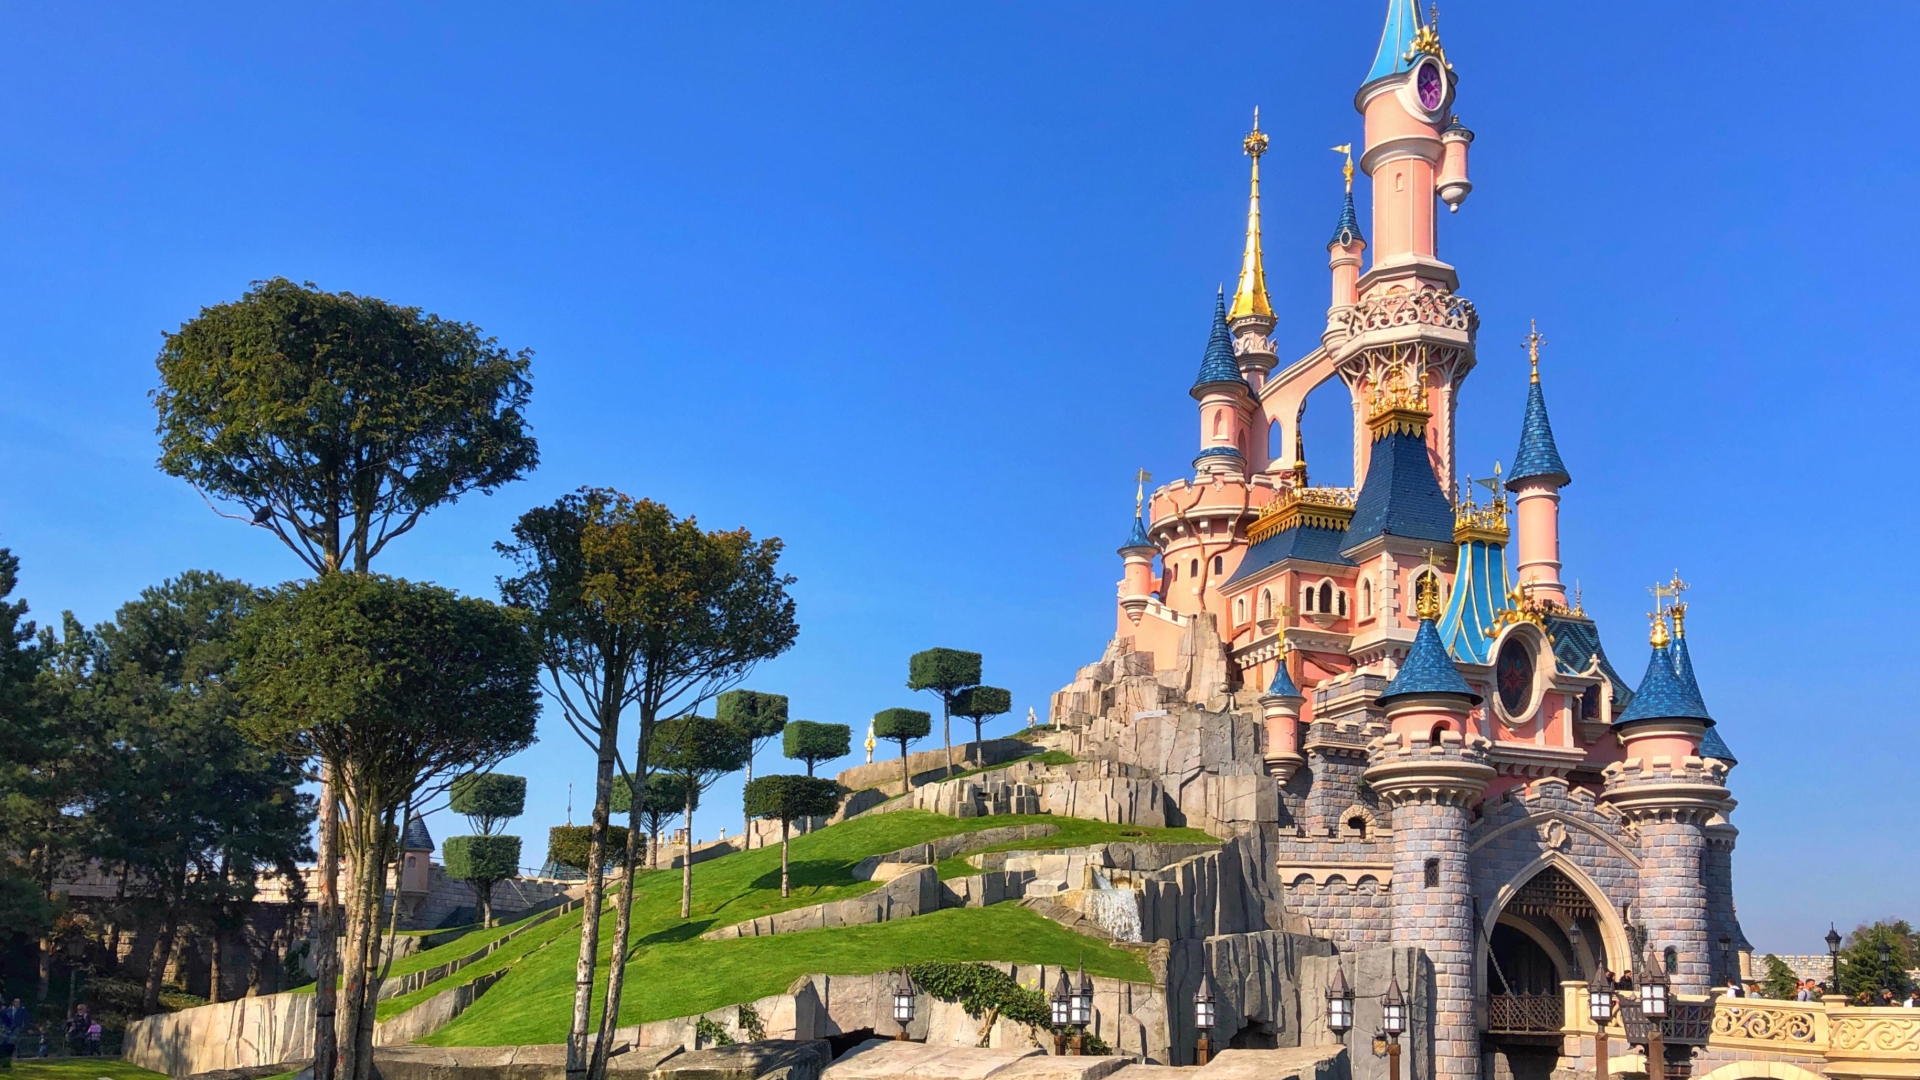 Disneyland Paris overnight stays from £85pppn plus FREE ferry & Disney+